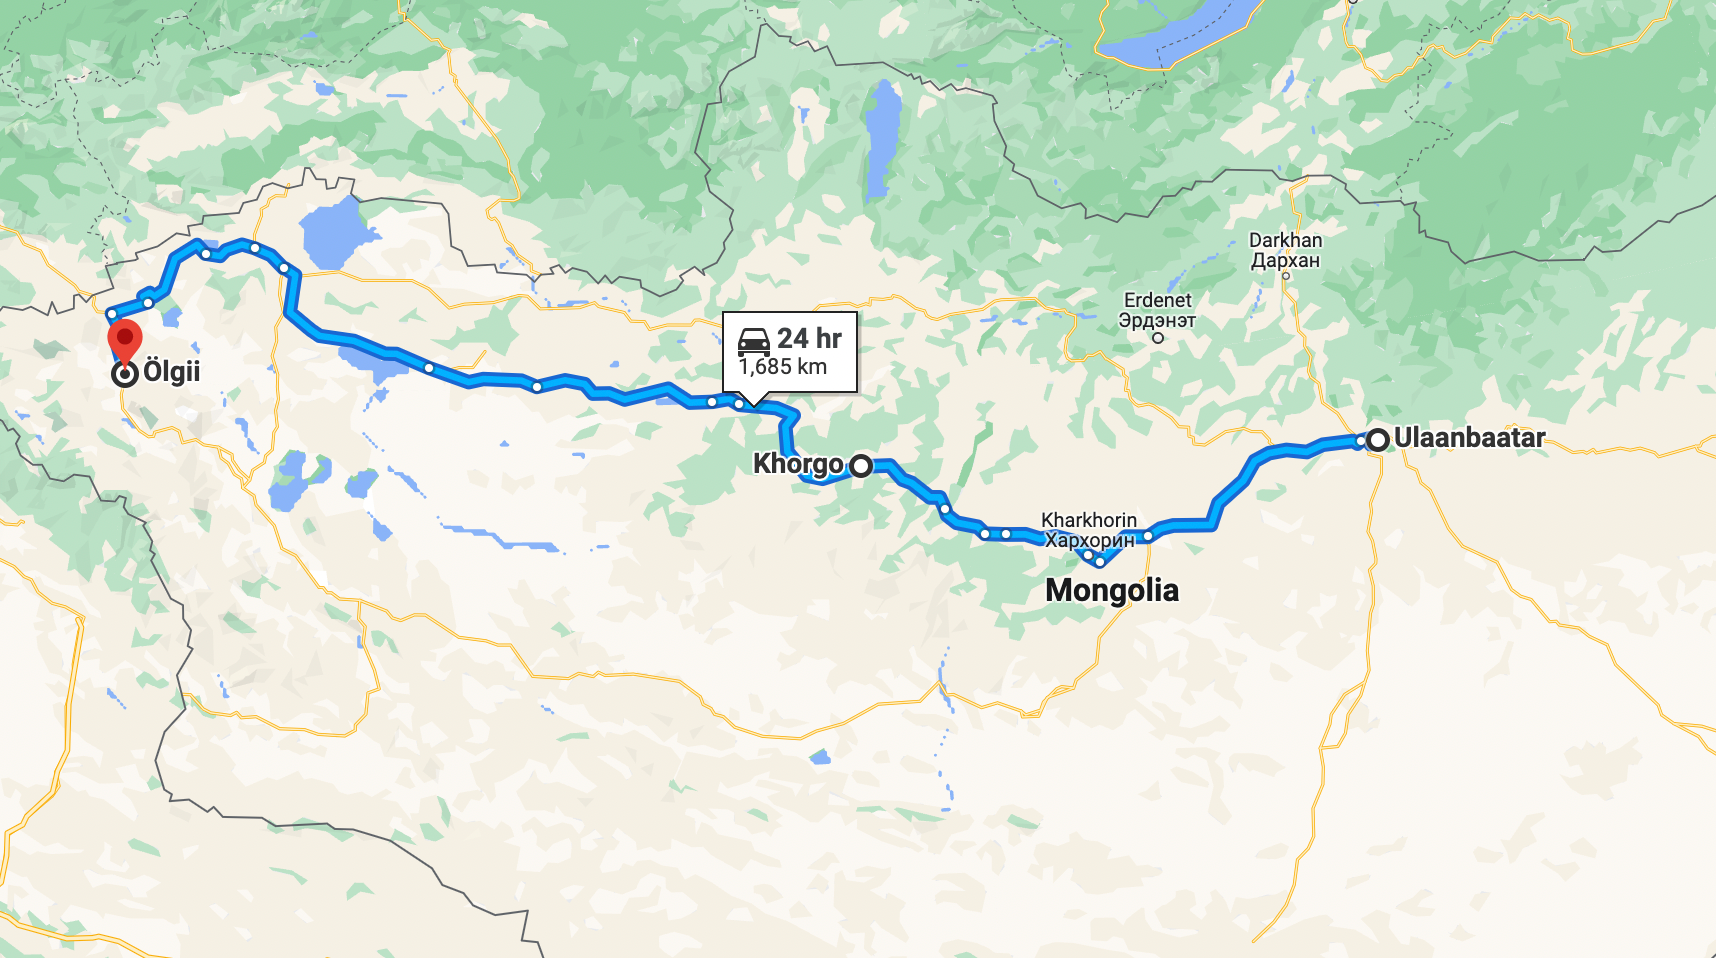 Northern Route from Ulaanbaatar to Ulgii